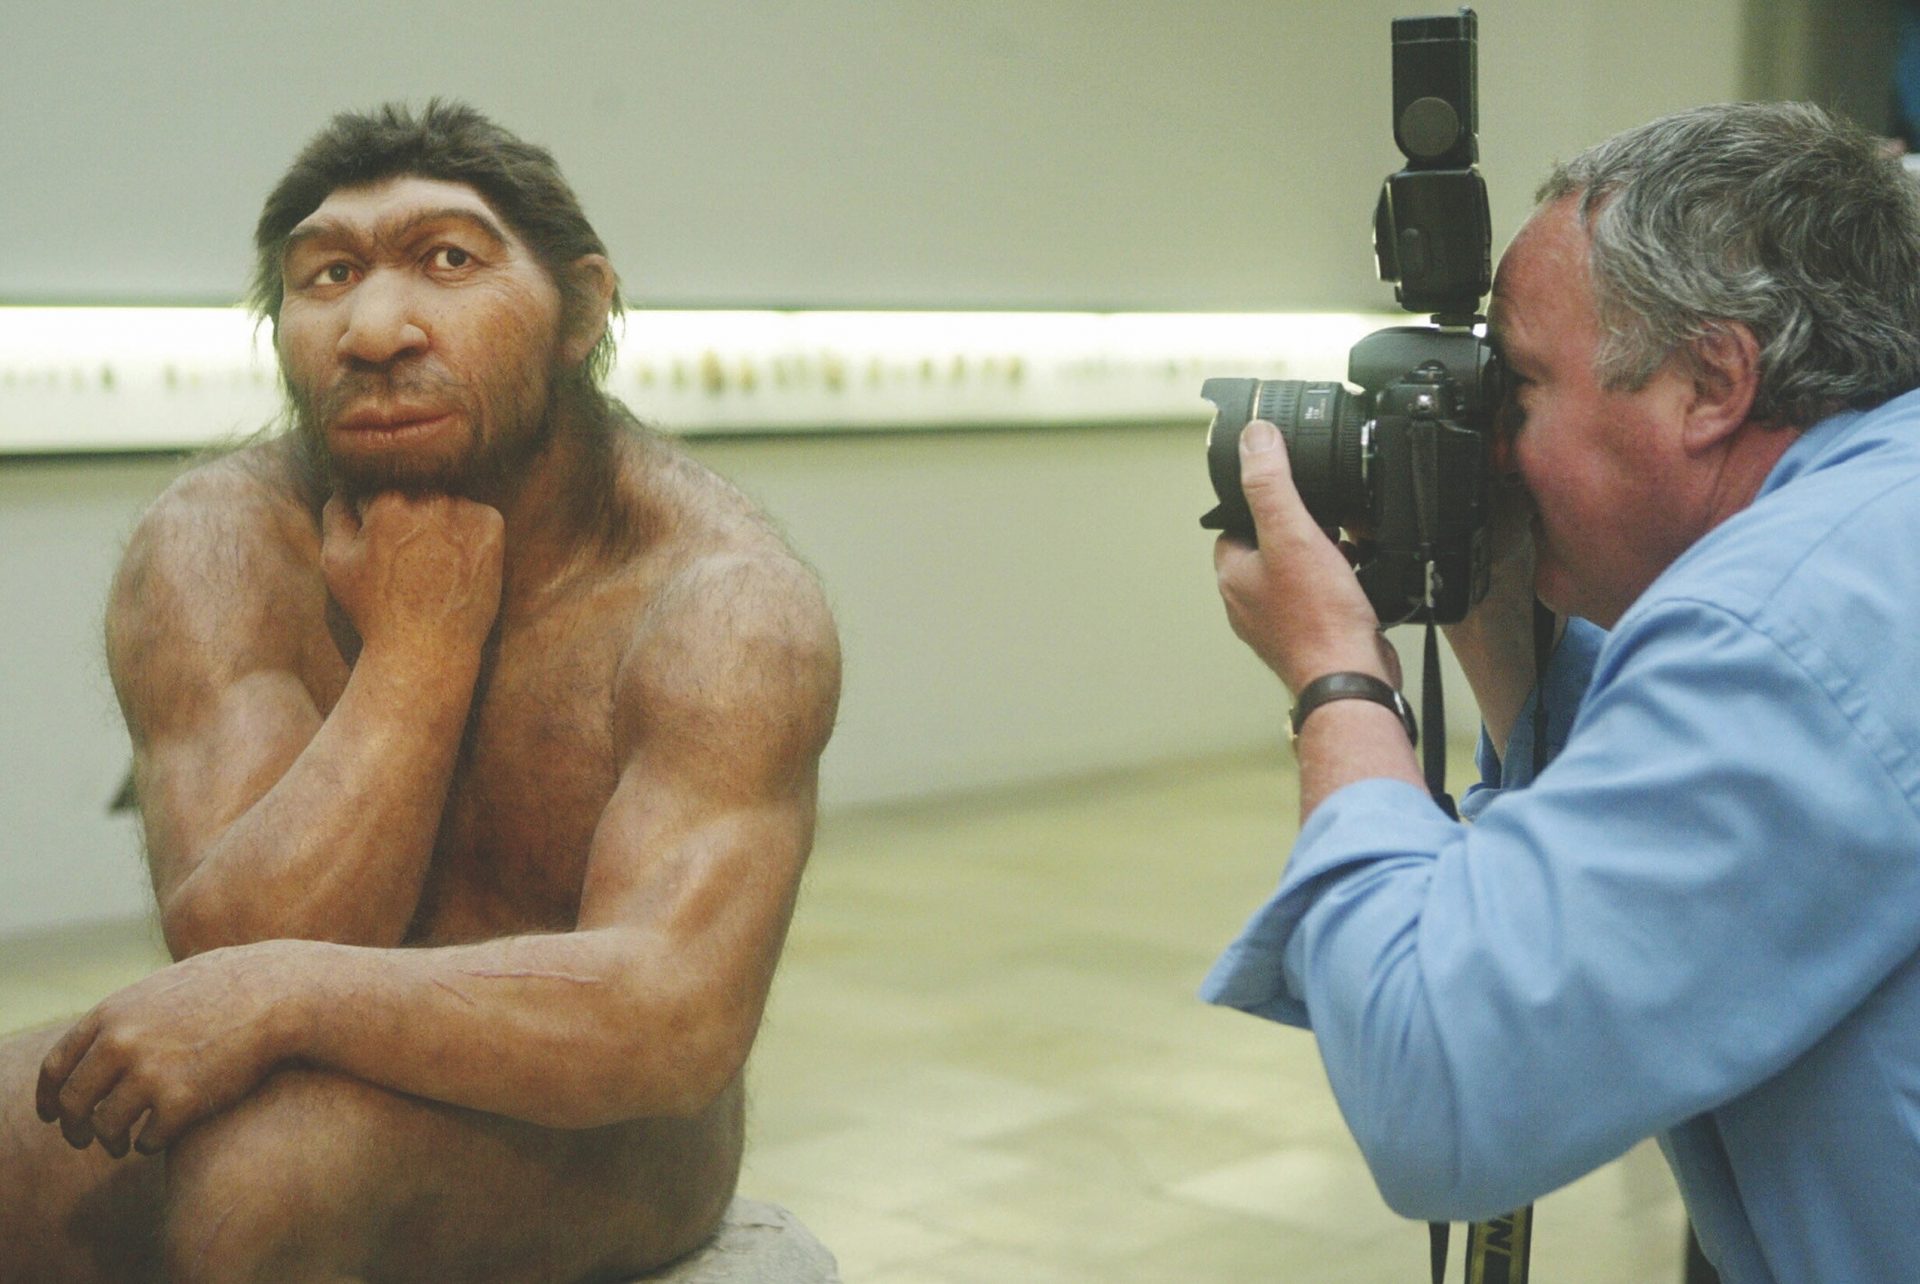 Man photographs Neanderthal figure